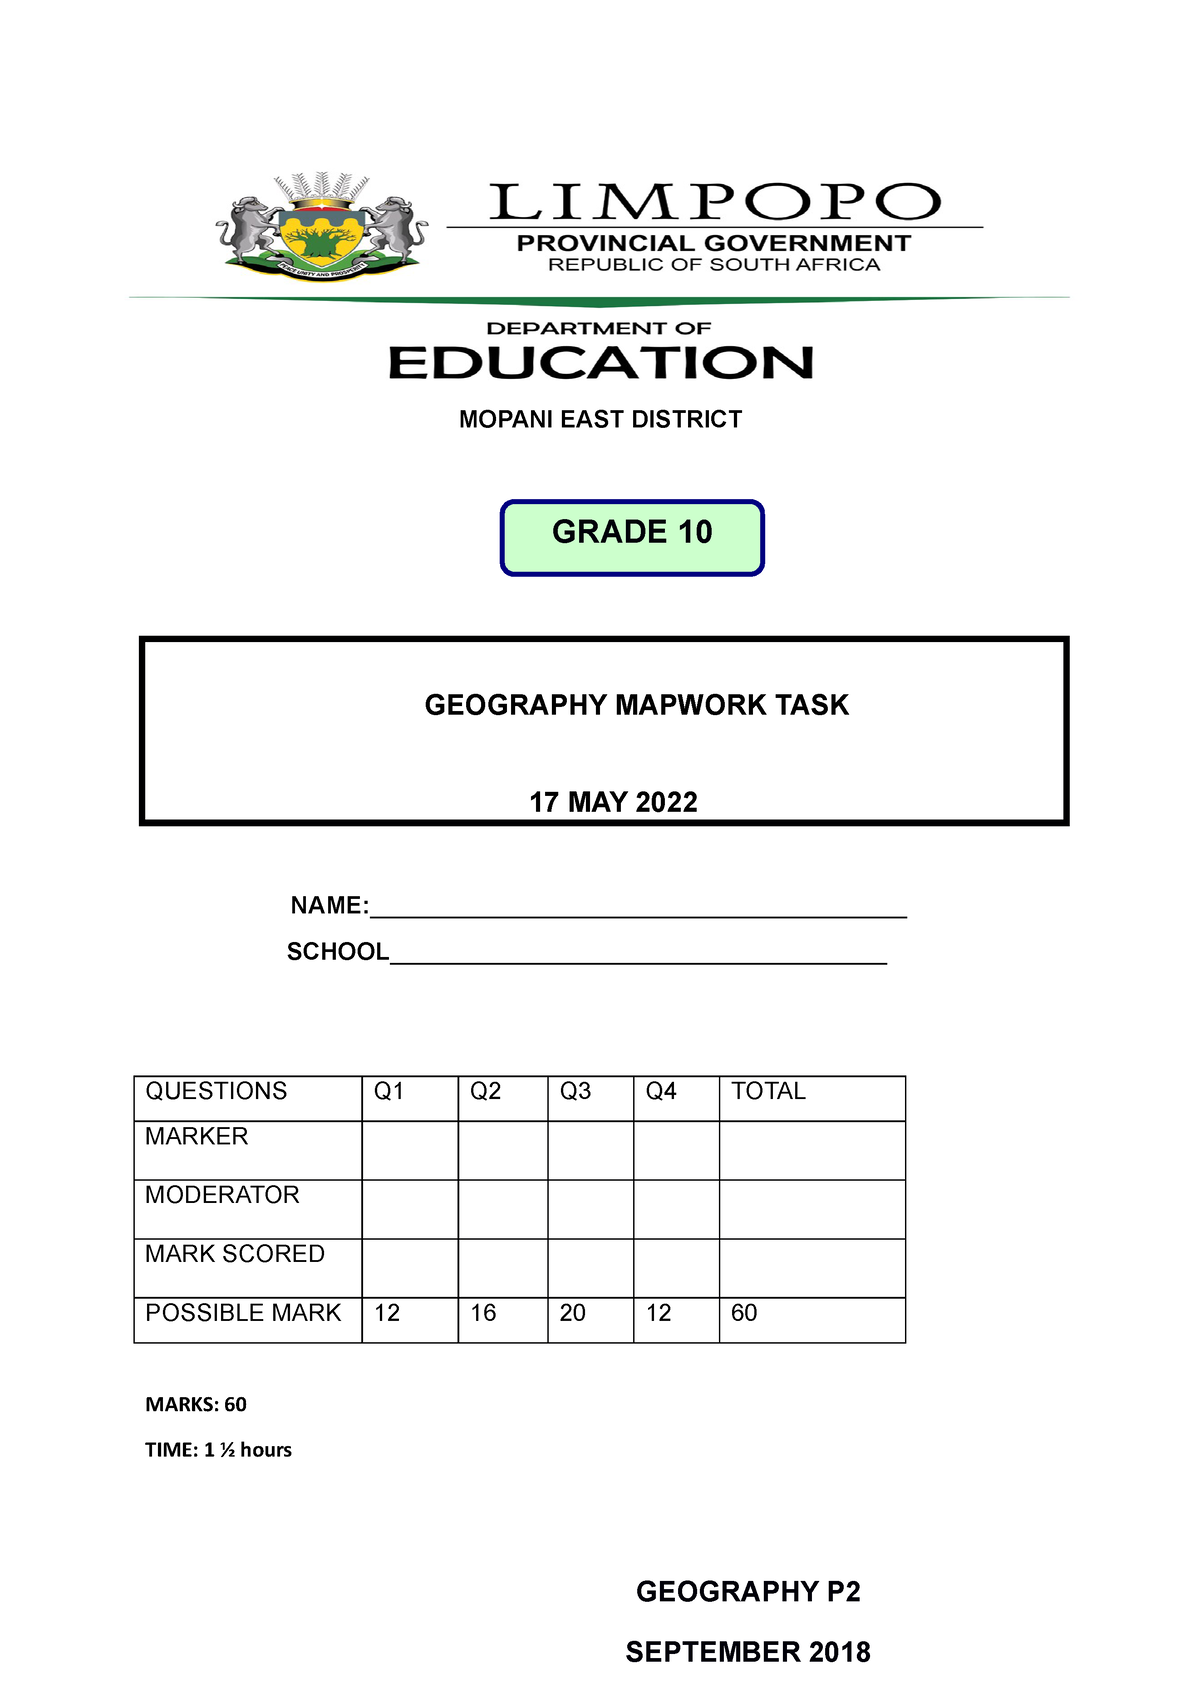 tourism grade 10 past papers term 3